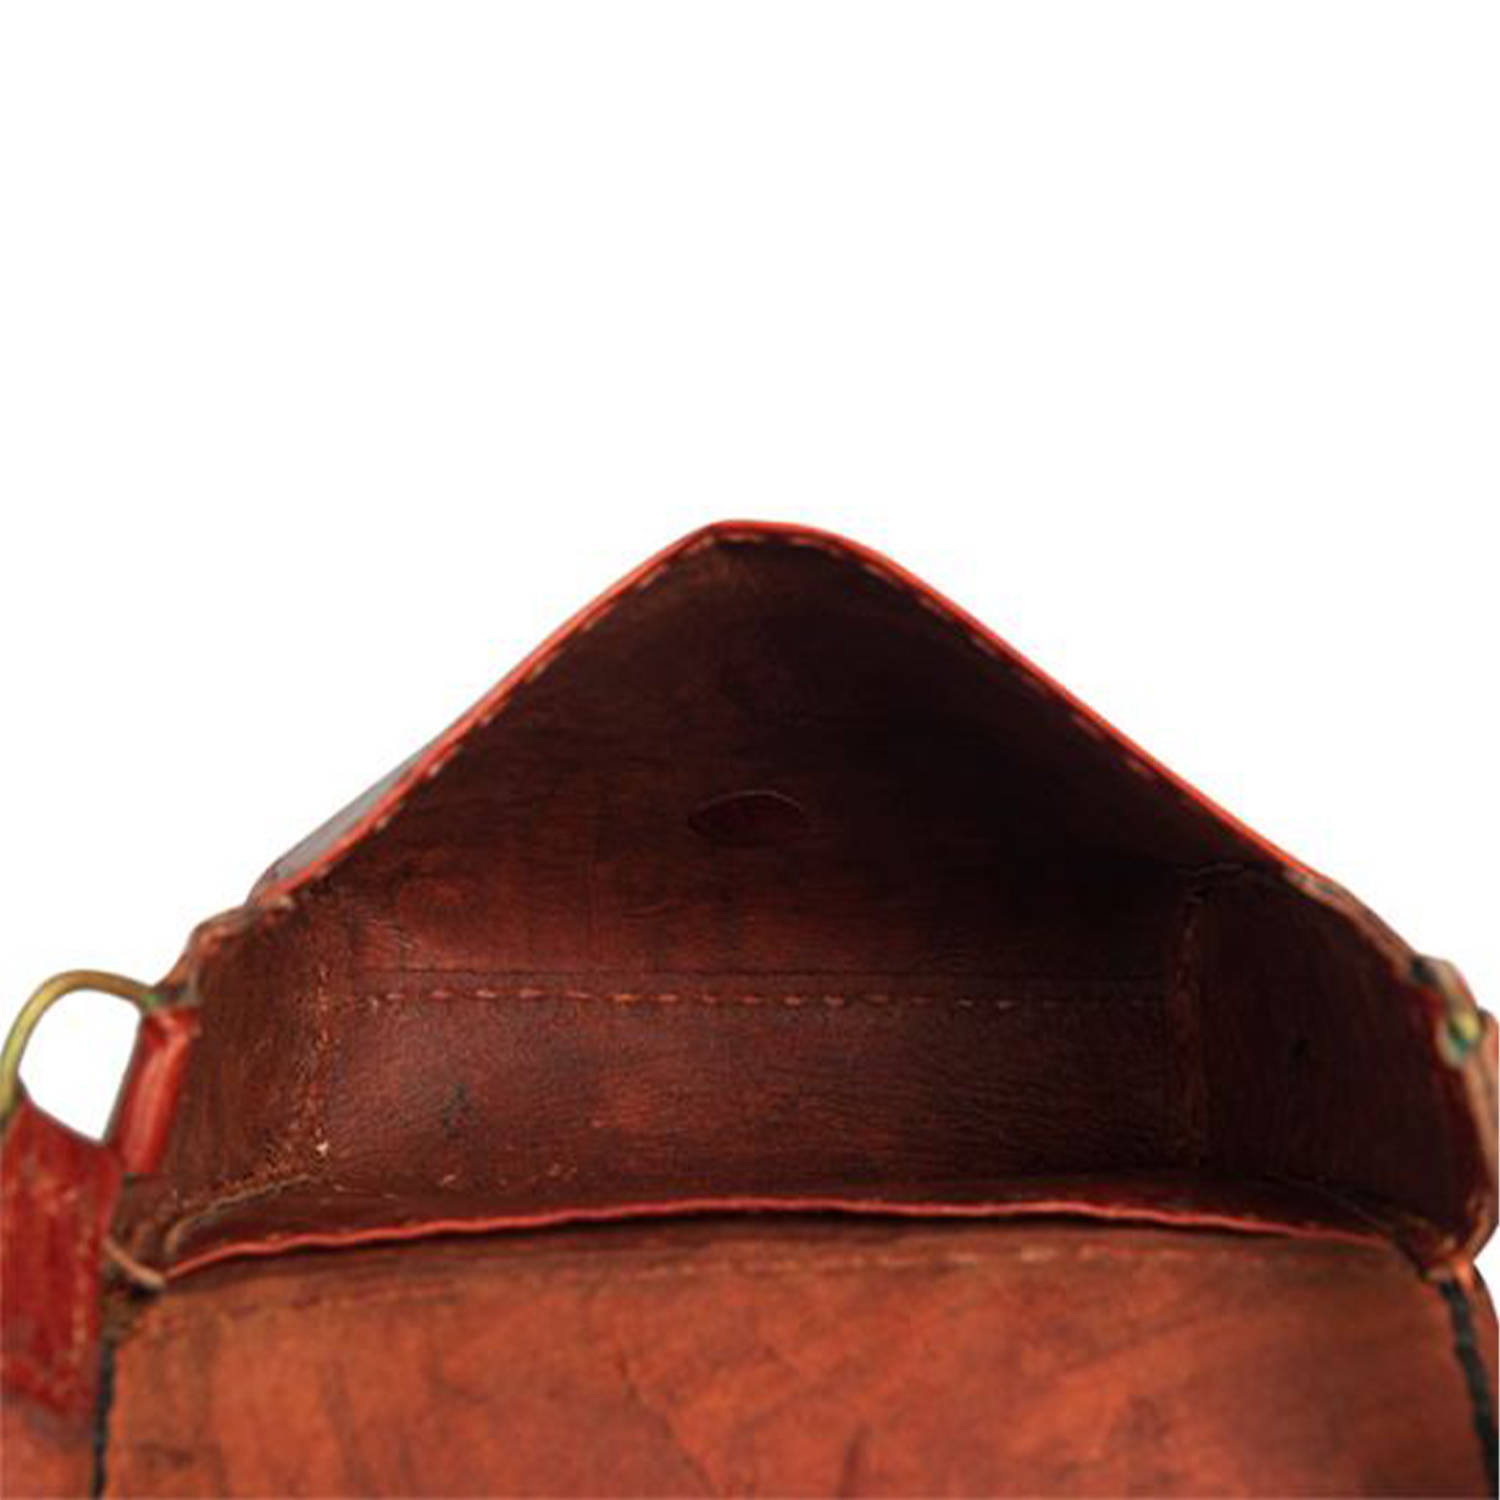 Woodlands Genuine Leather Bag Only 3 Bag In Stock - Men - 1738571902